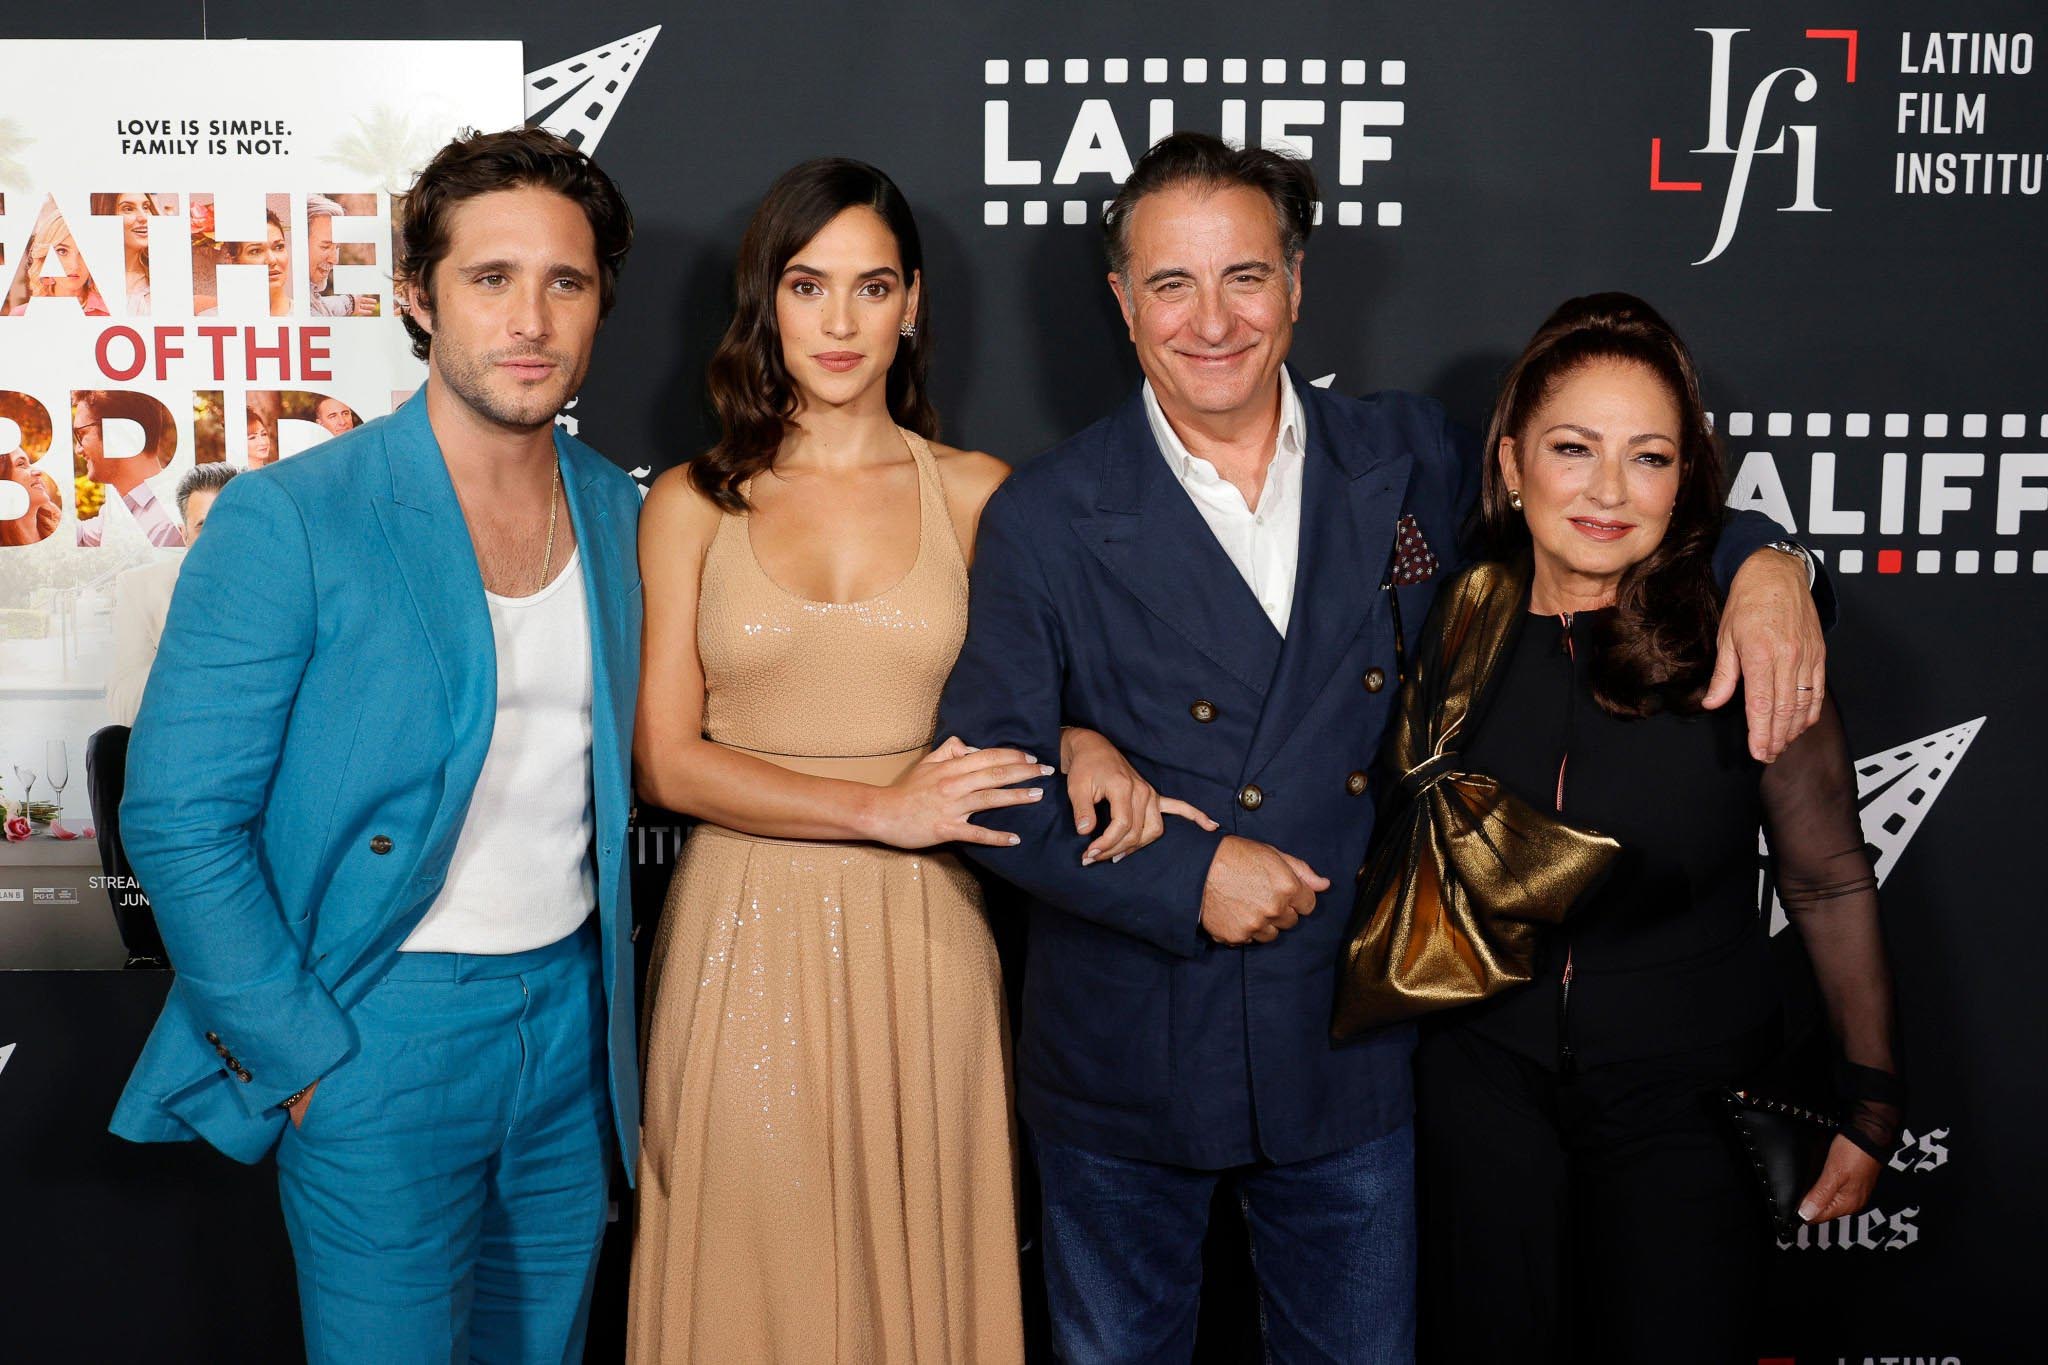 Photos: LA Latino International Film Festival Premiere of “Father of the Bride”